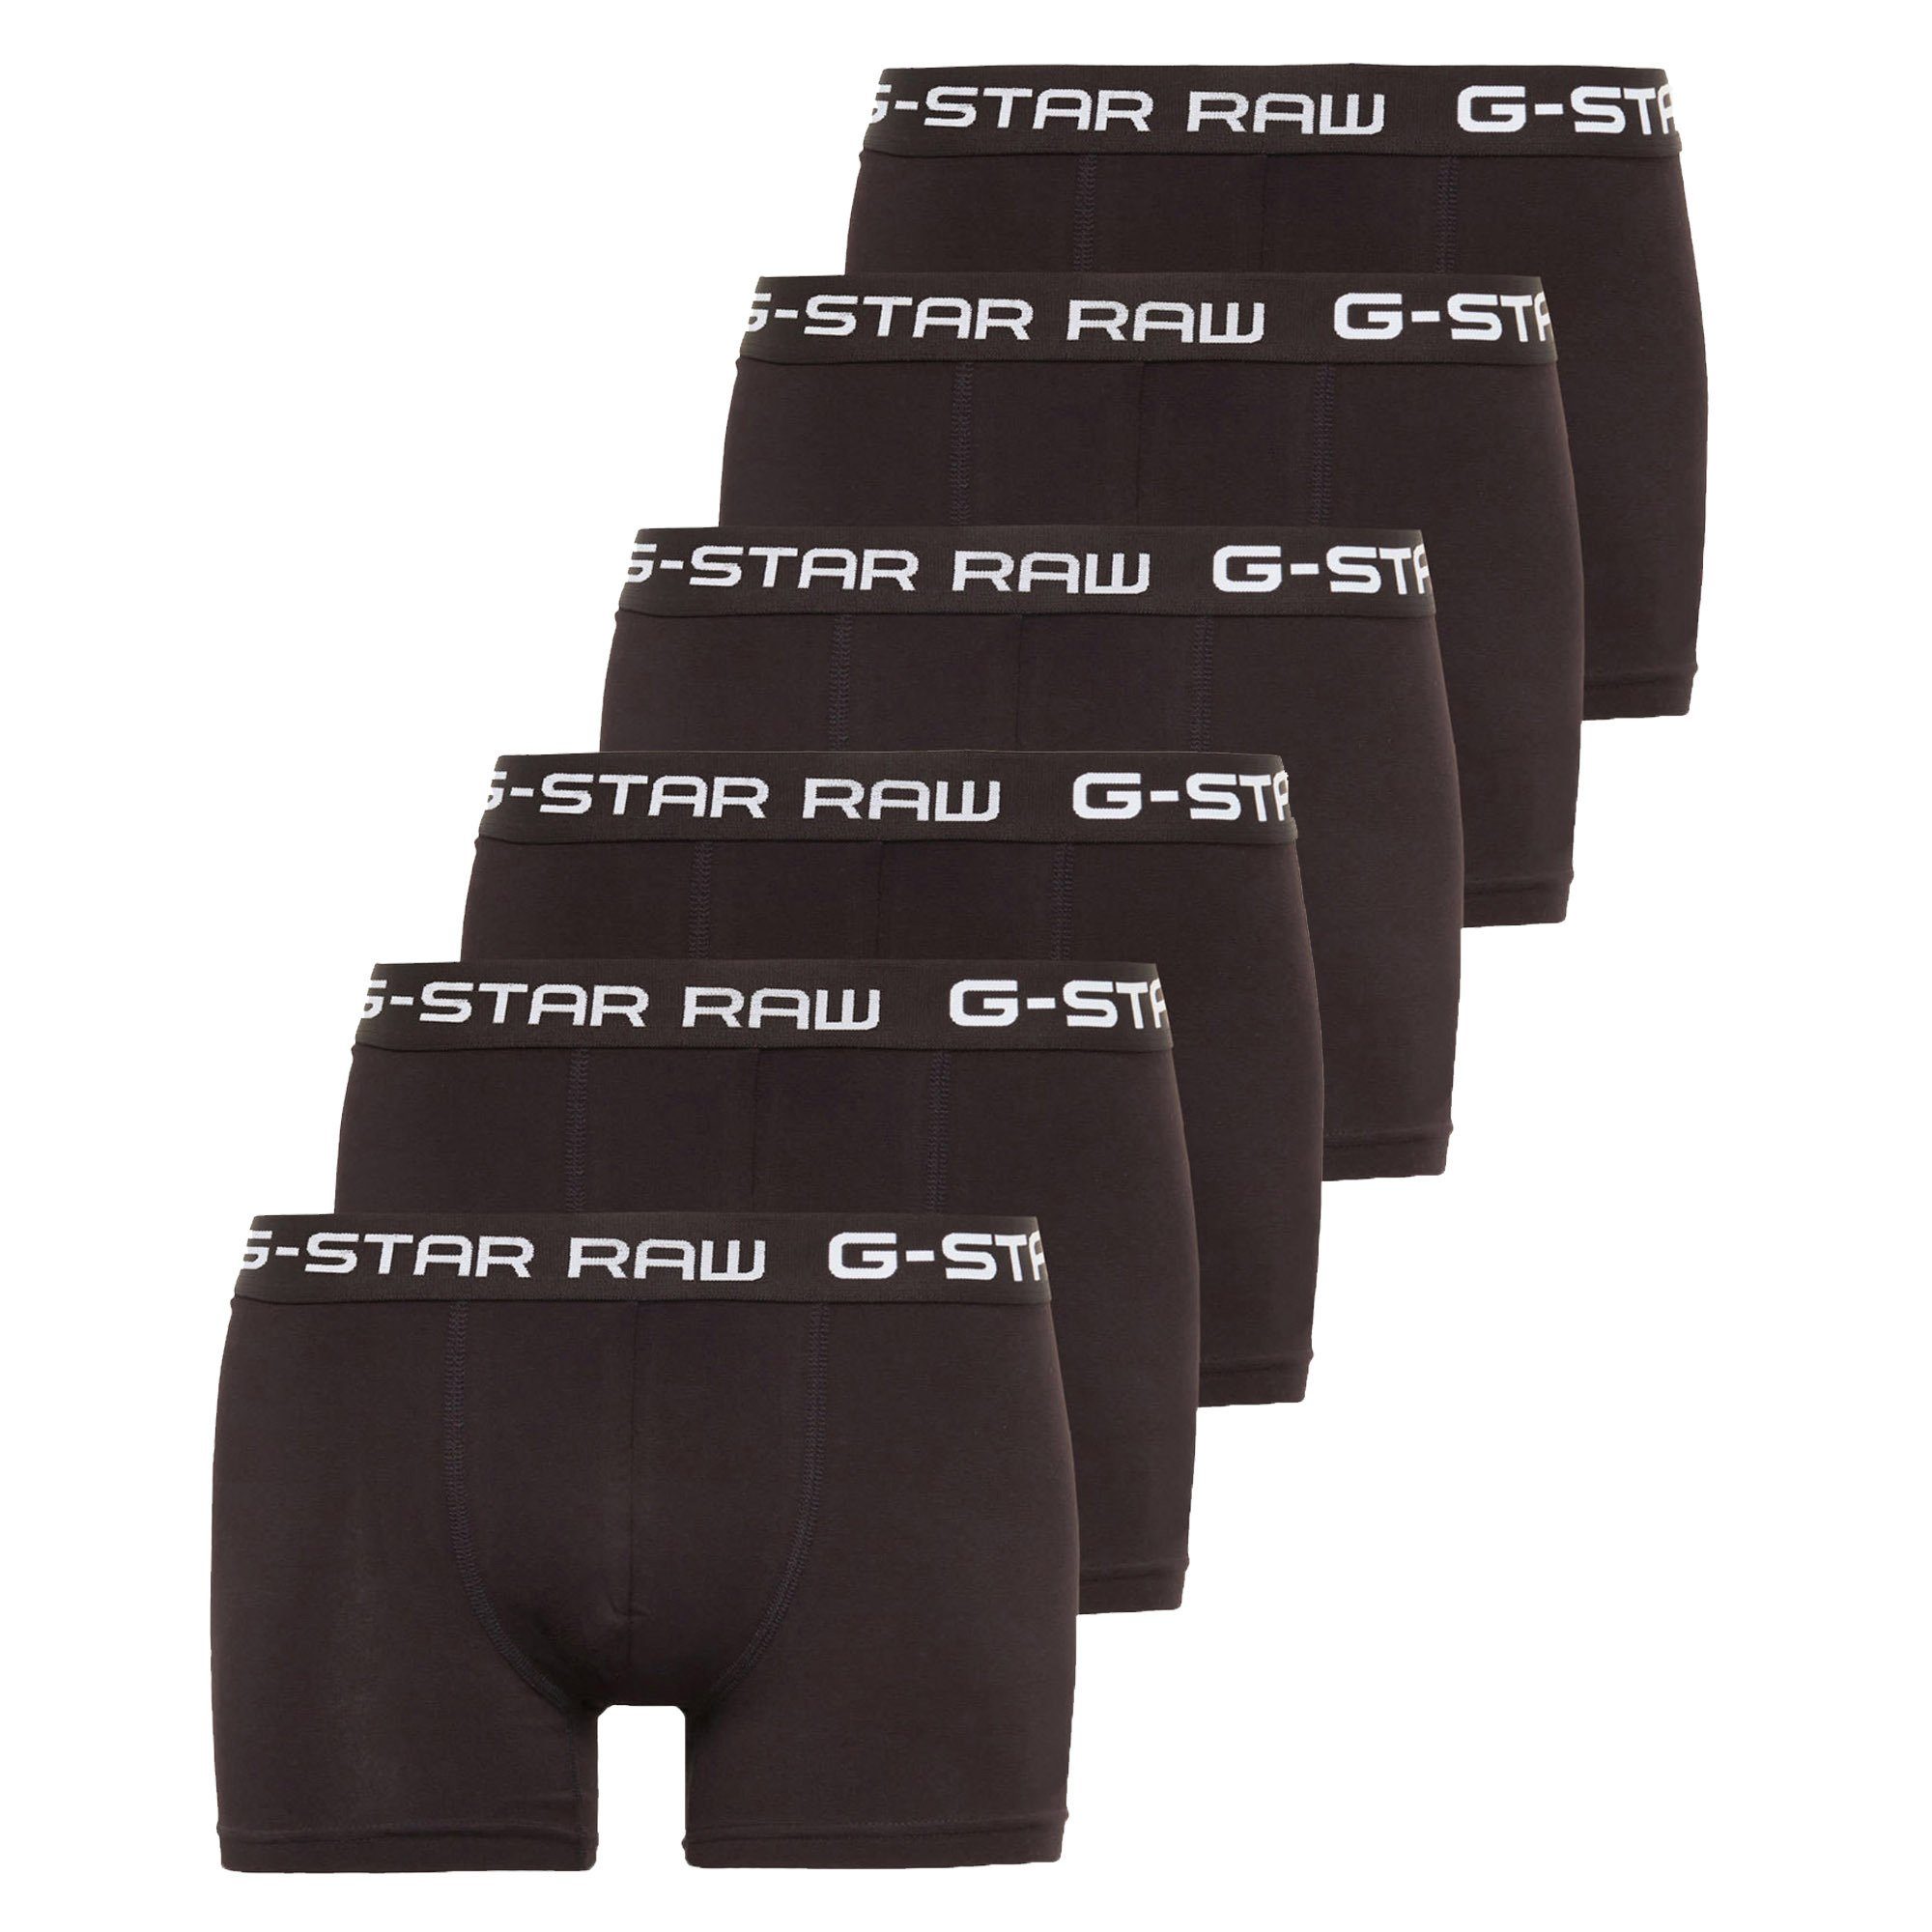 G-Star RAW Boxer Herren Shorts 6er Pack - Classic Trunk, Logobund Schwarz